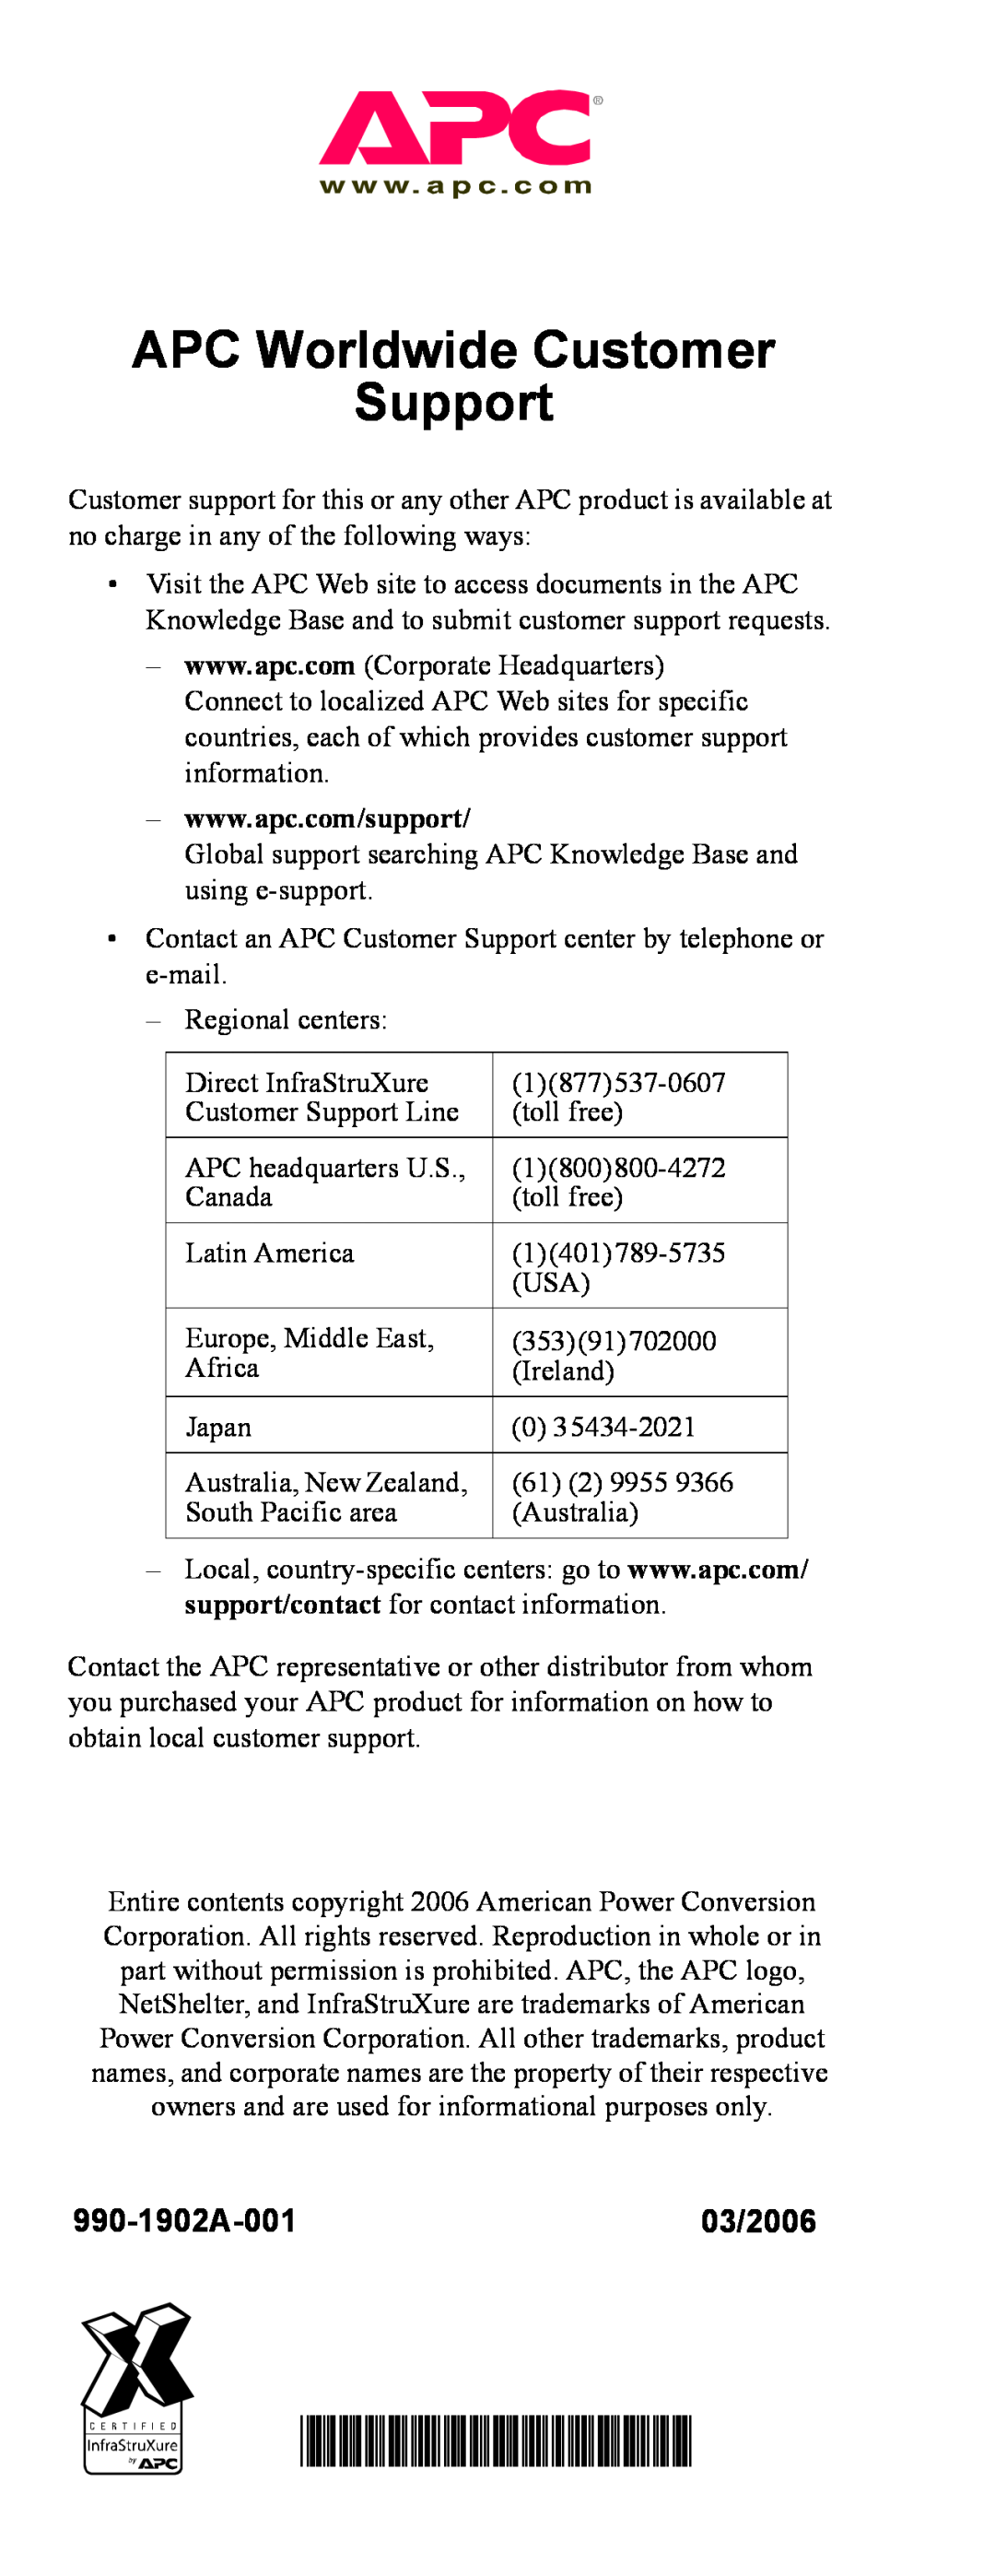 APC AP7564, AP7592, pdu0344a, pdu0190b manual APC Worldwide Customer Support, 990-1902A-00103/2006 